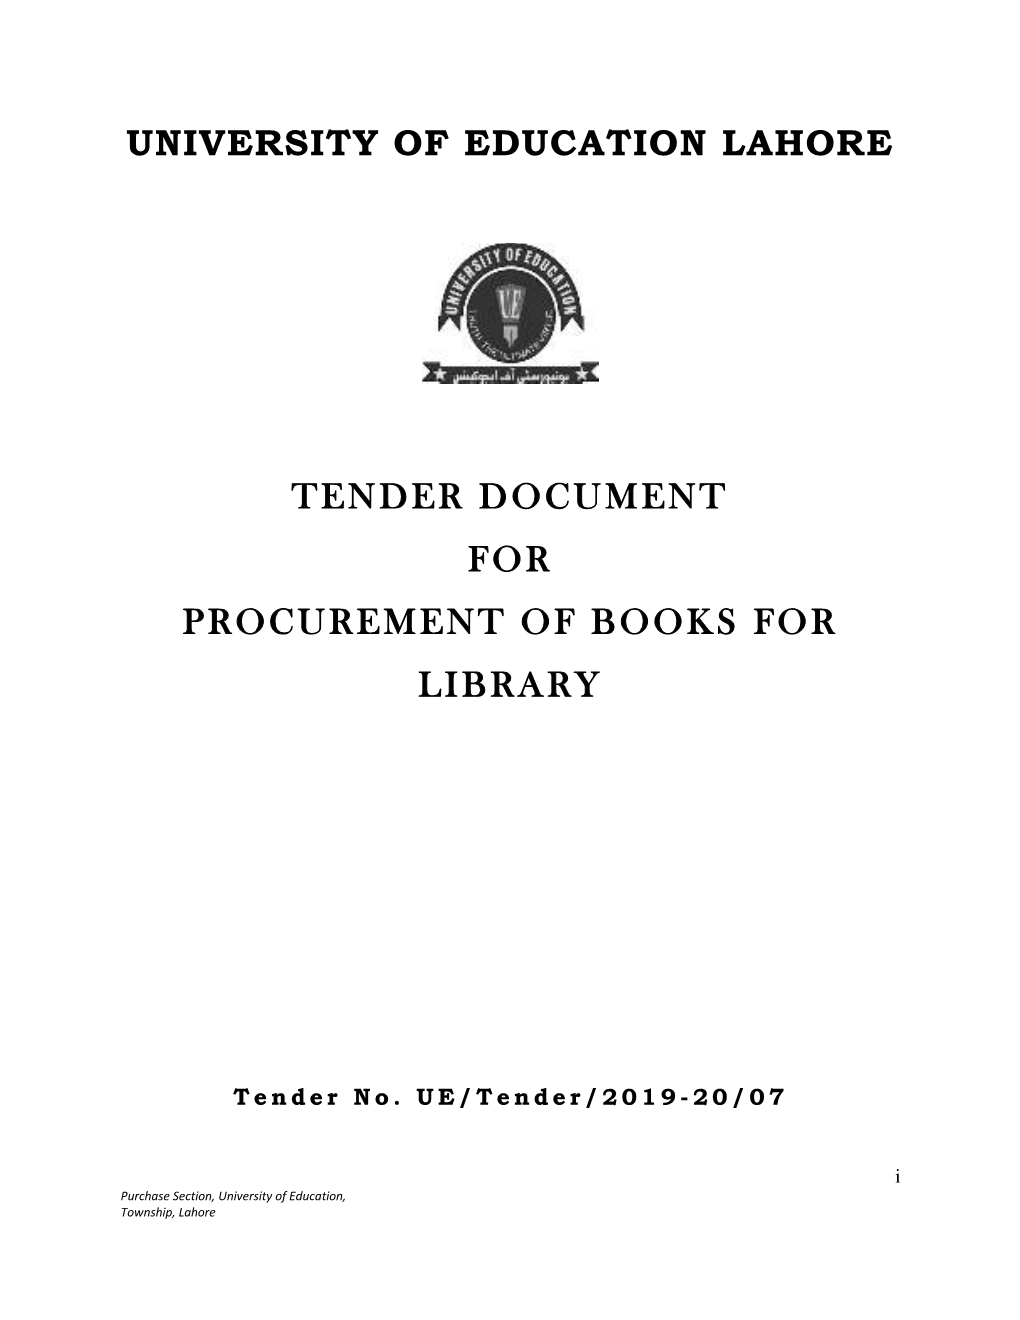 University of Education Lahore Tender Document for Procurement of Books